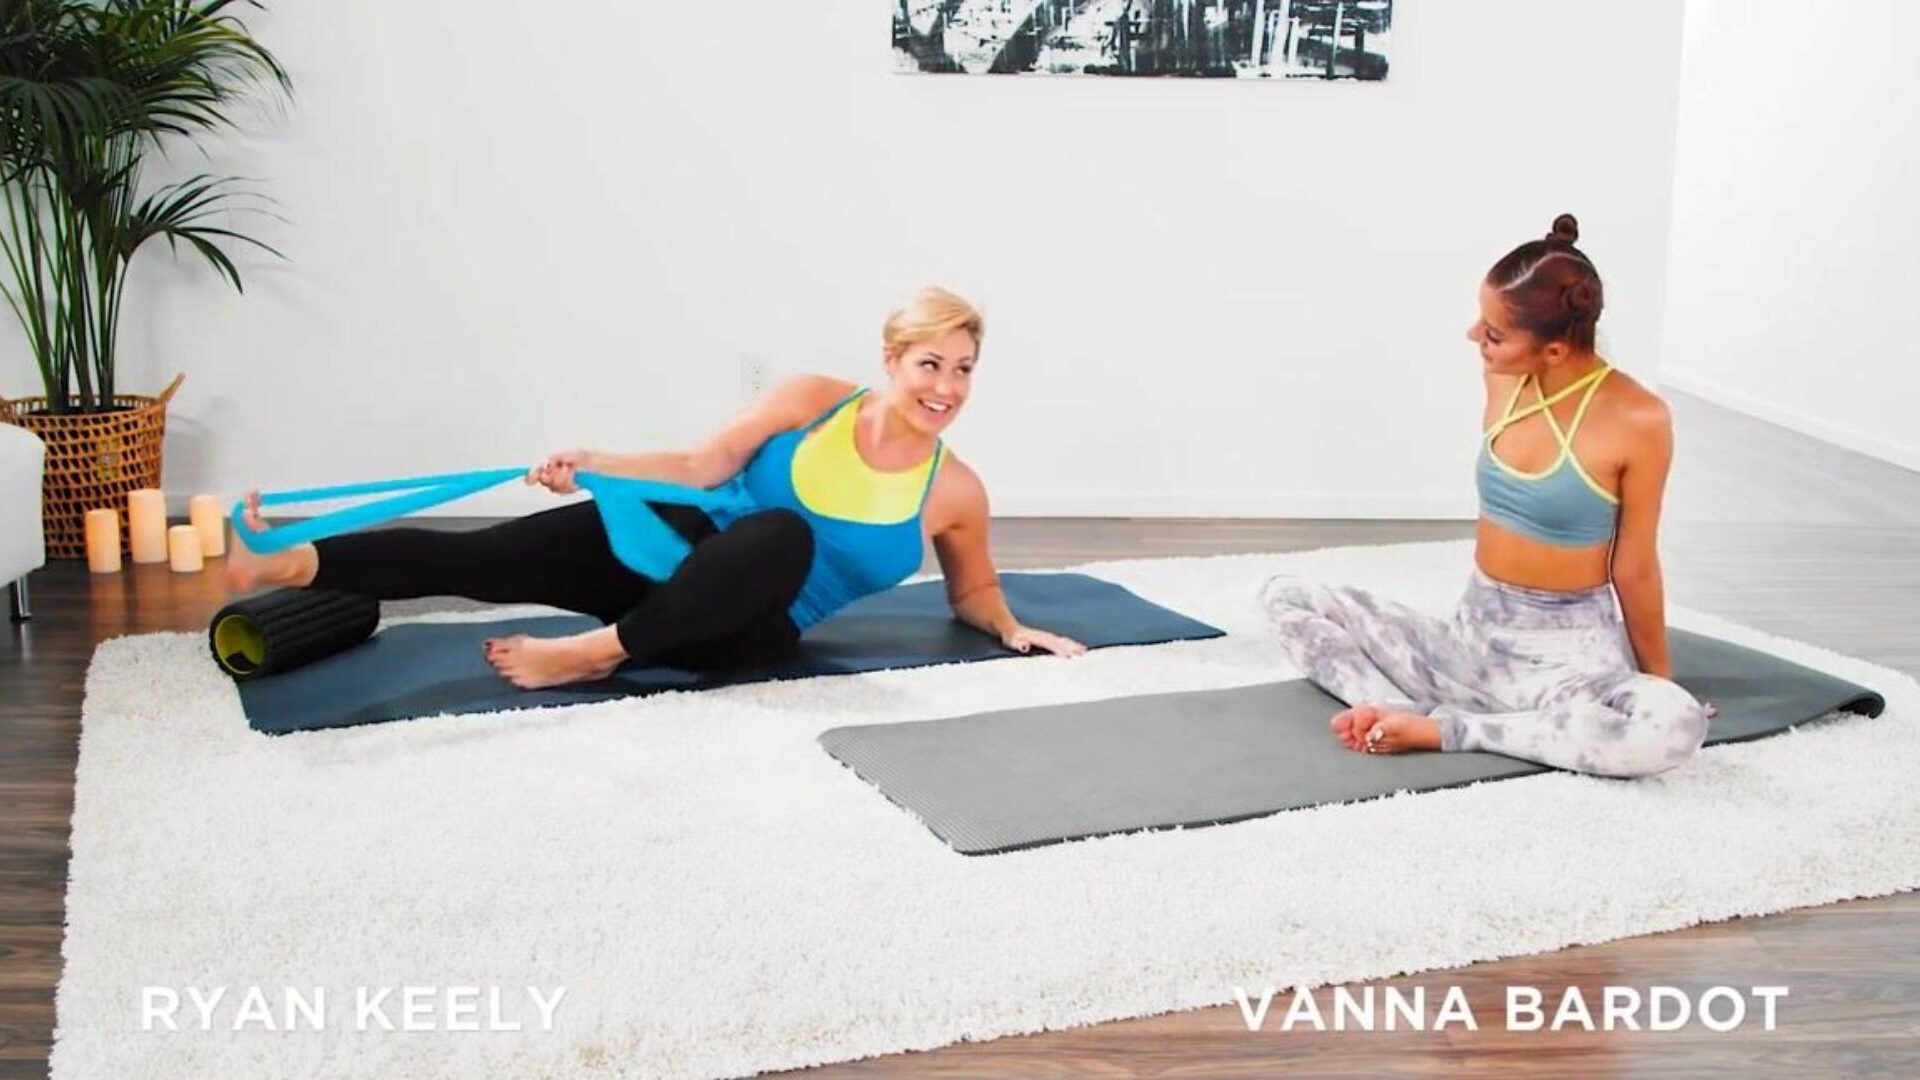 Vanna Bardot Has A Fingering Yoga Training With Ryan Keely Vanna Bardot and Ryan Keely